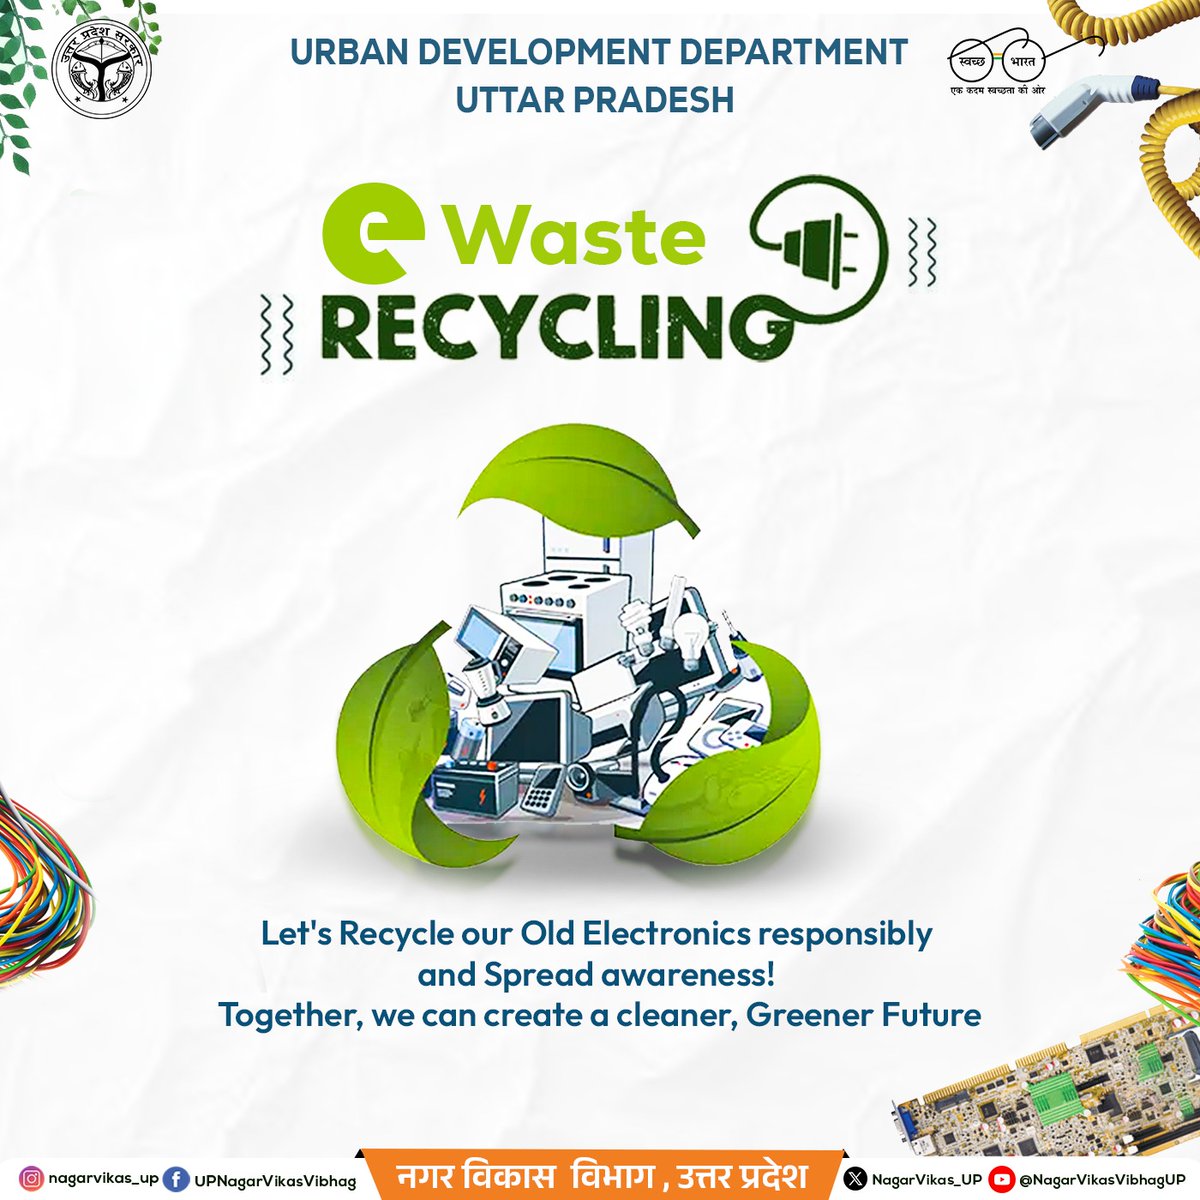 ♻️📱 Recycle your e-waste with us and help Uttar Pradesh go greener!

#EwasteRecycling #GreenUP #uttarpradesh